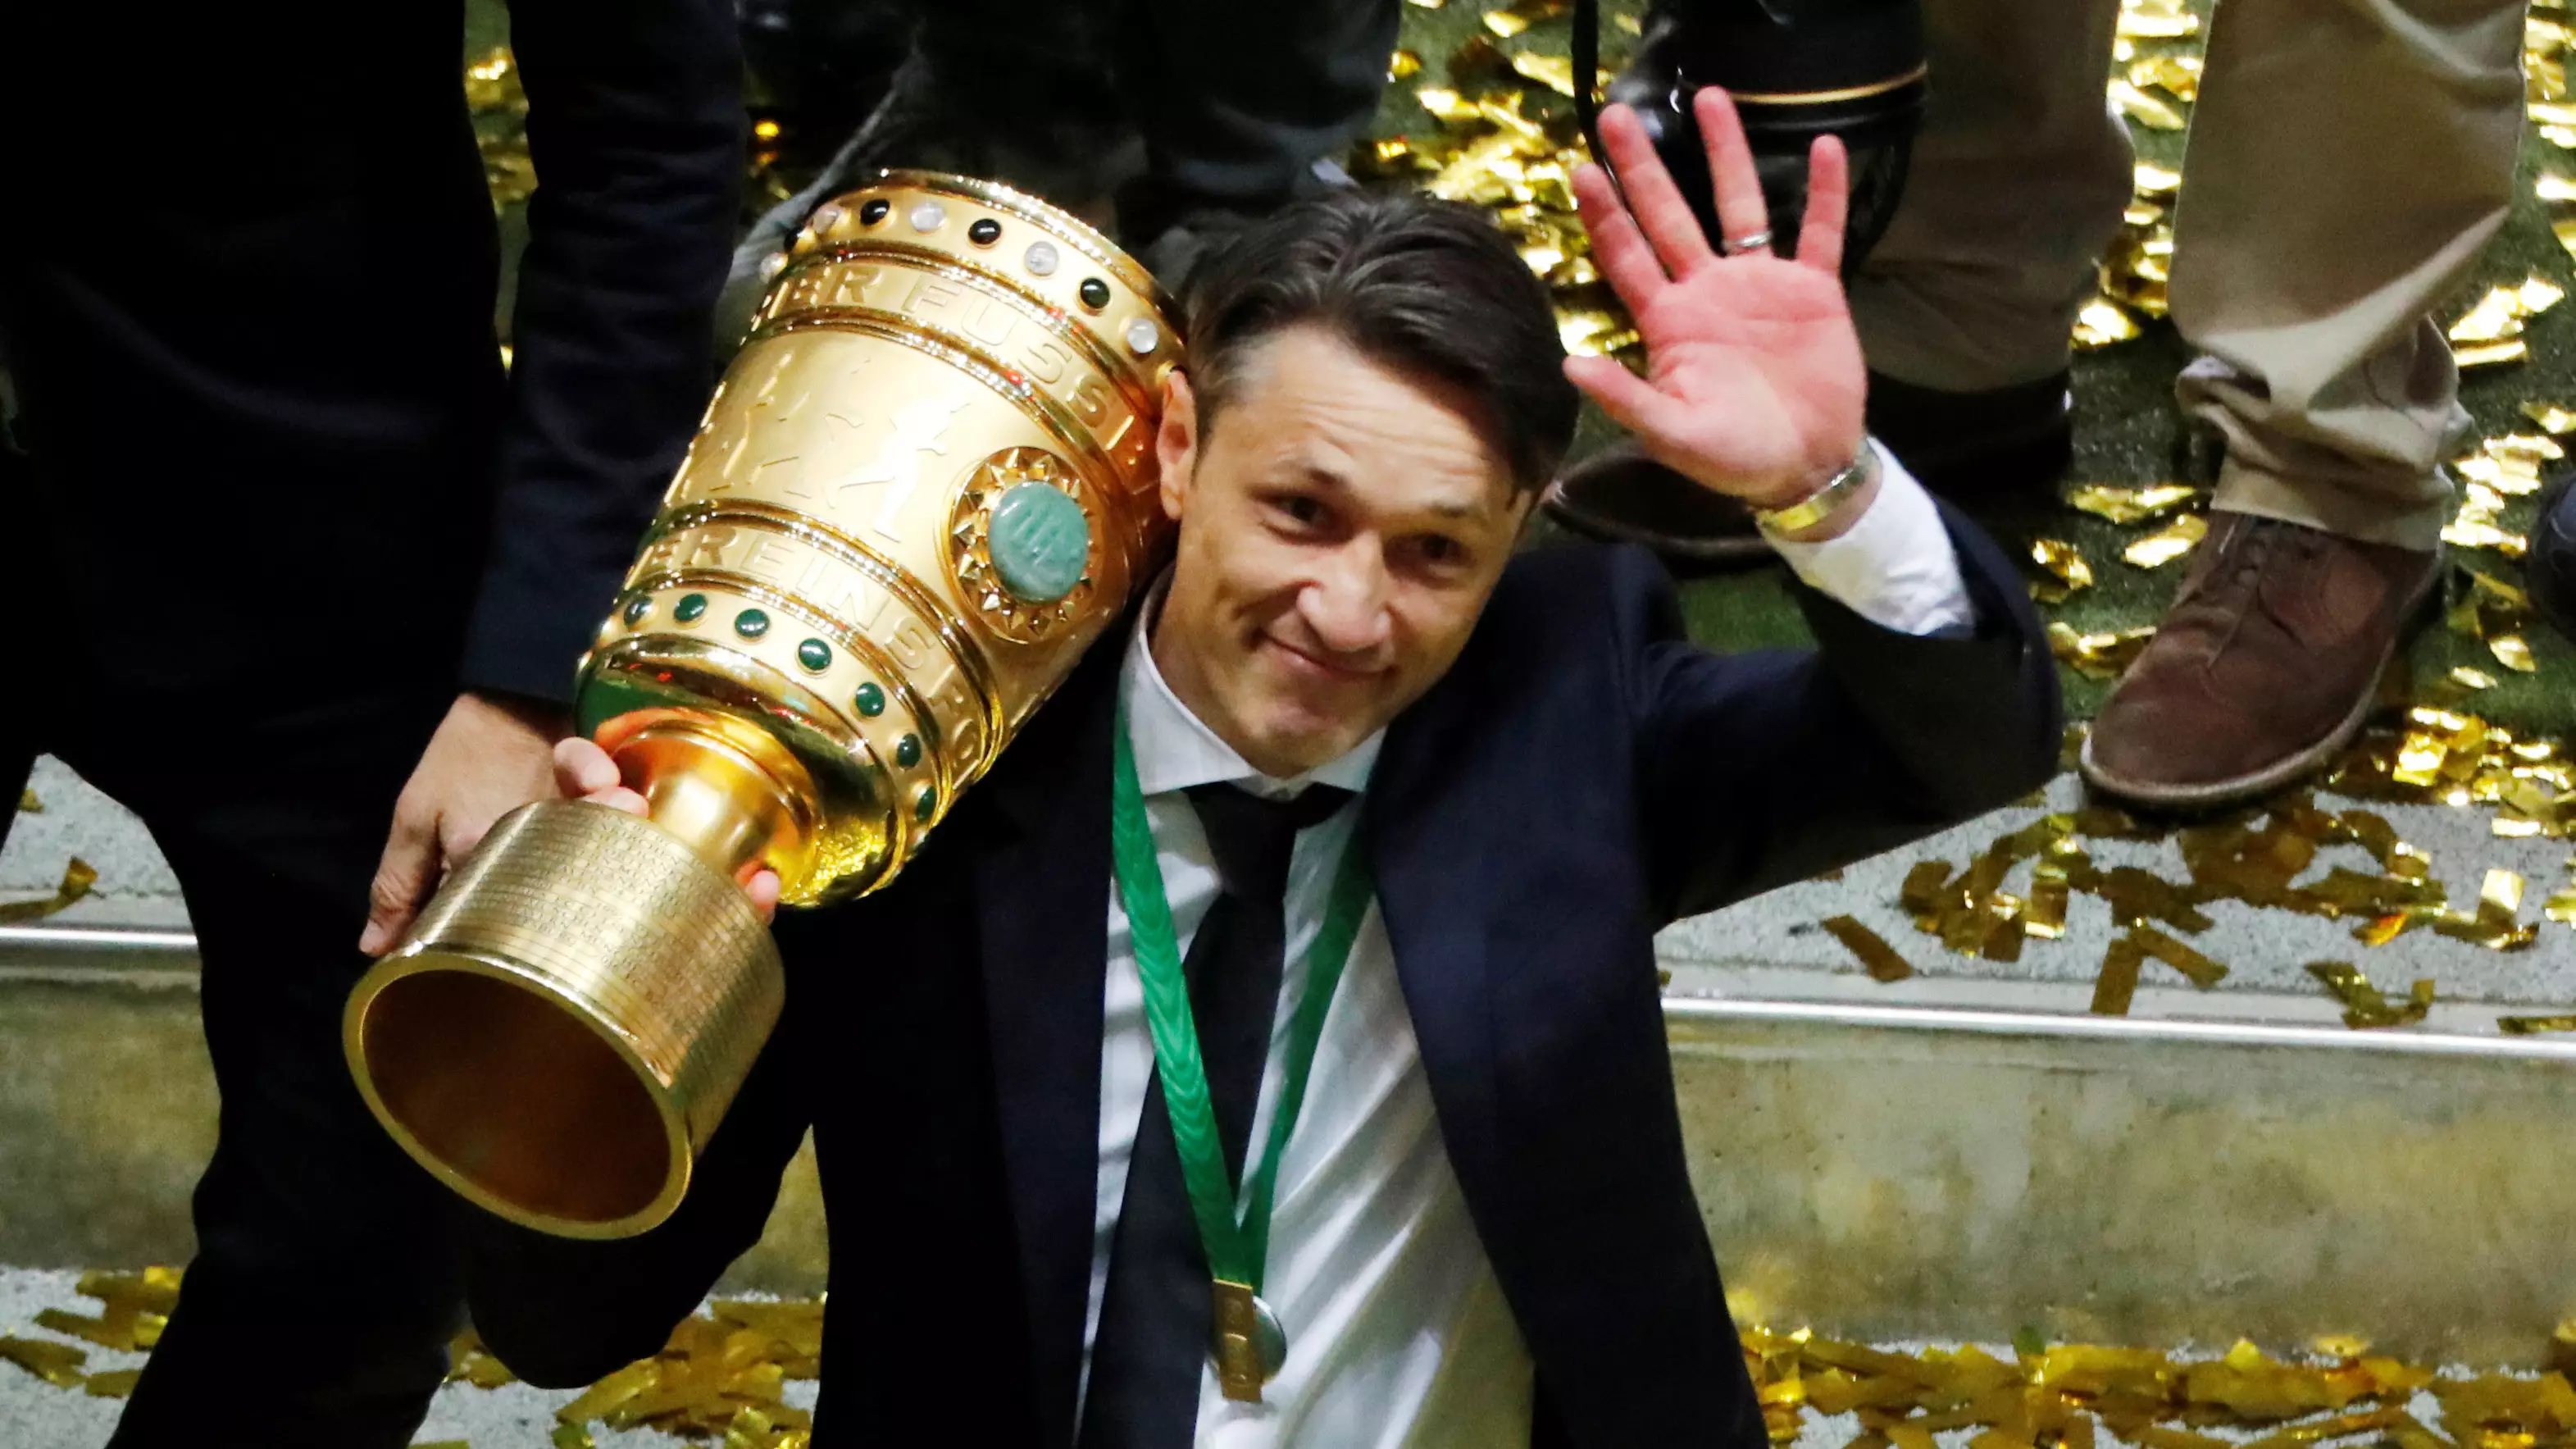 Нико Ковач выиграл Кубок Германии с "Баварией"